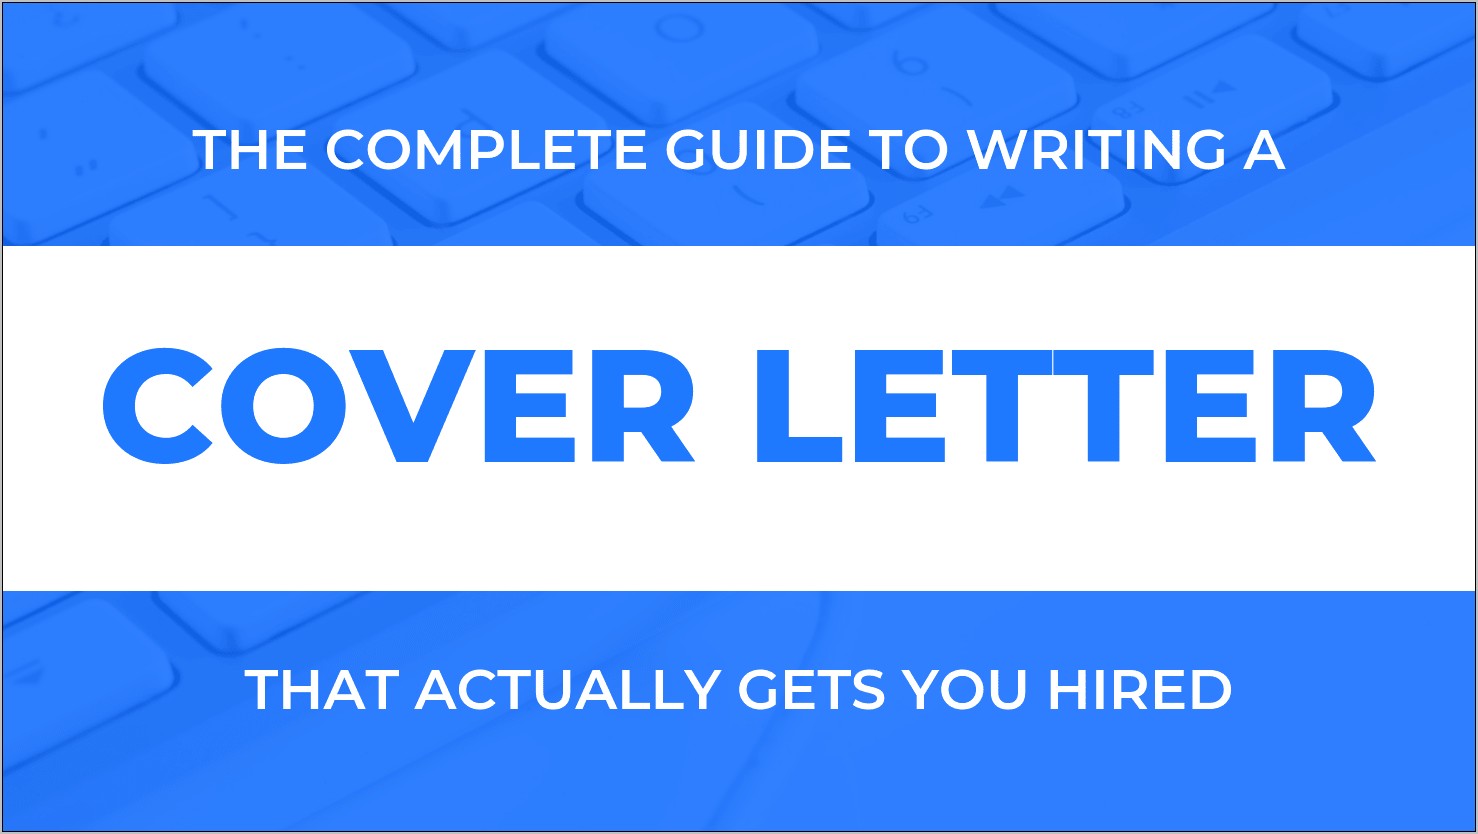 Email Cover Letter Etiquette For Resume